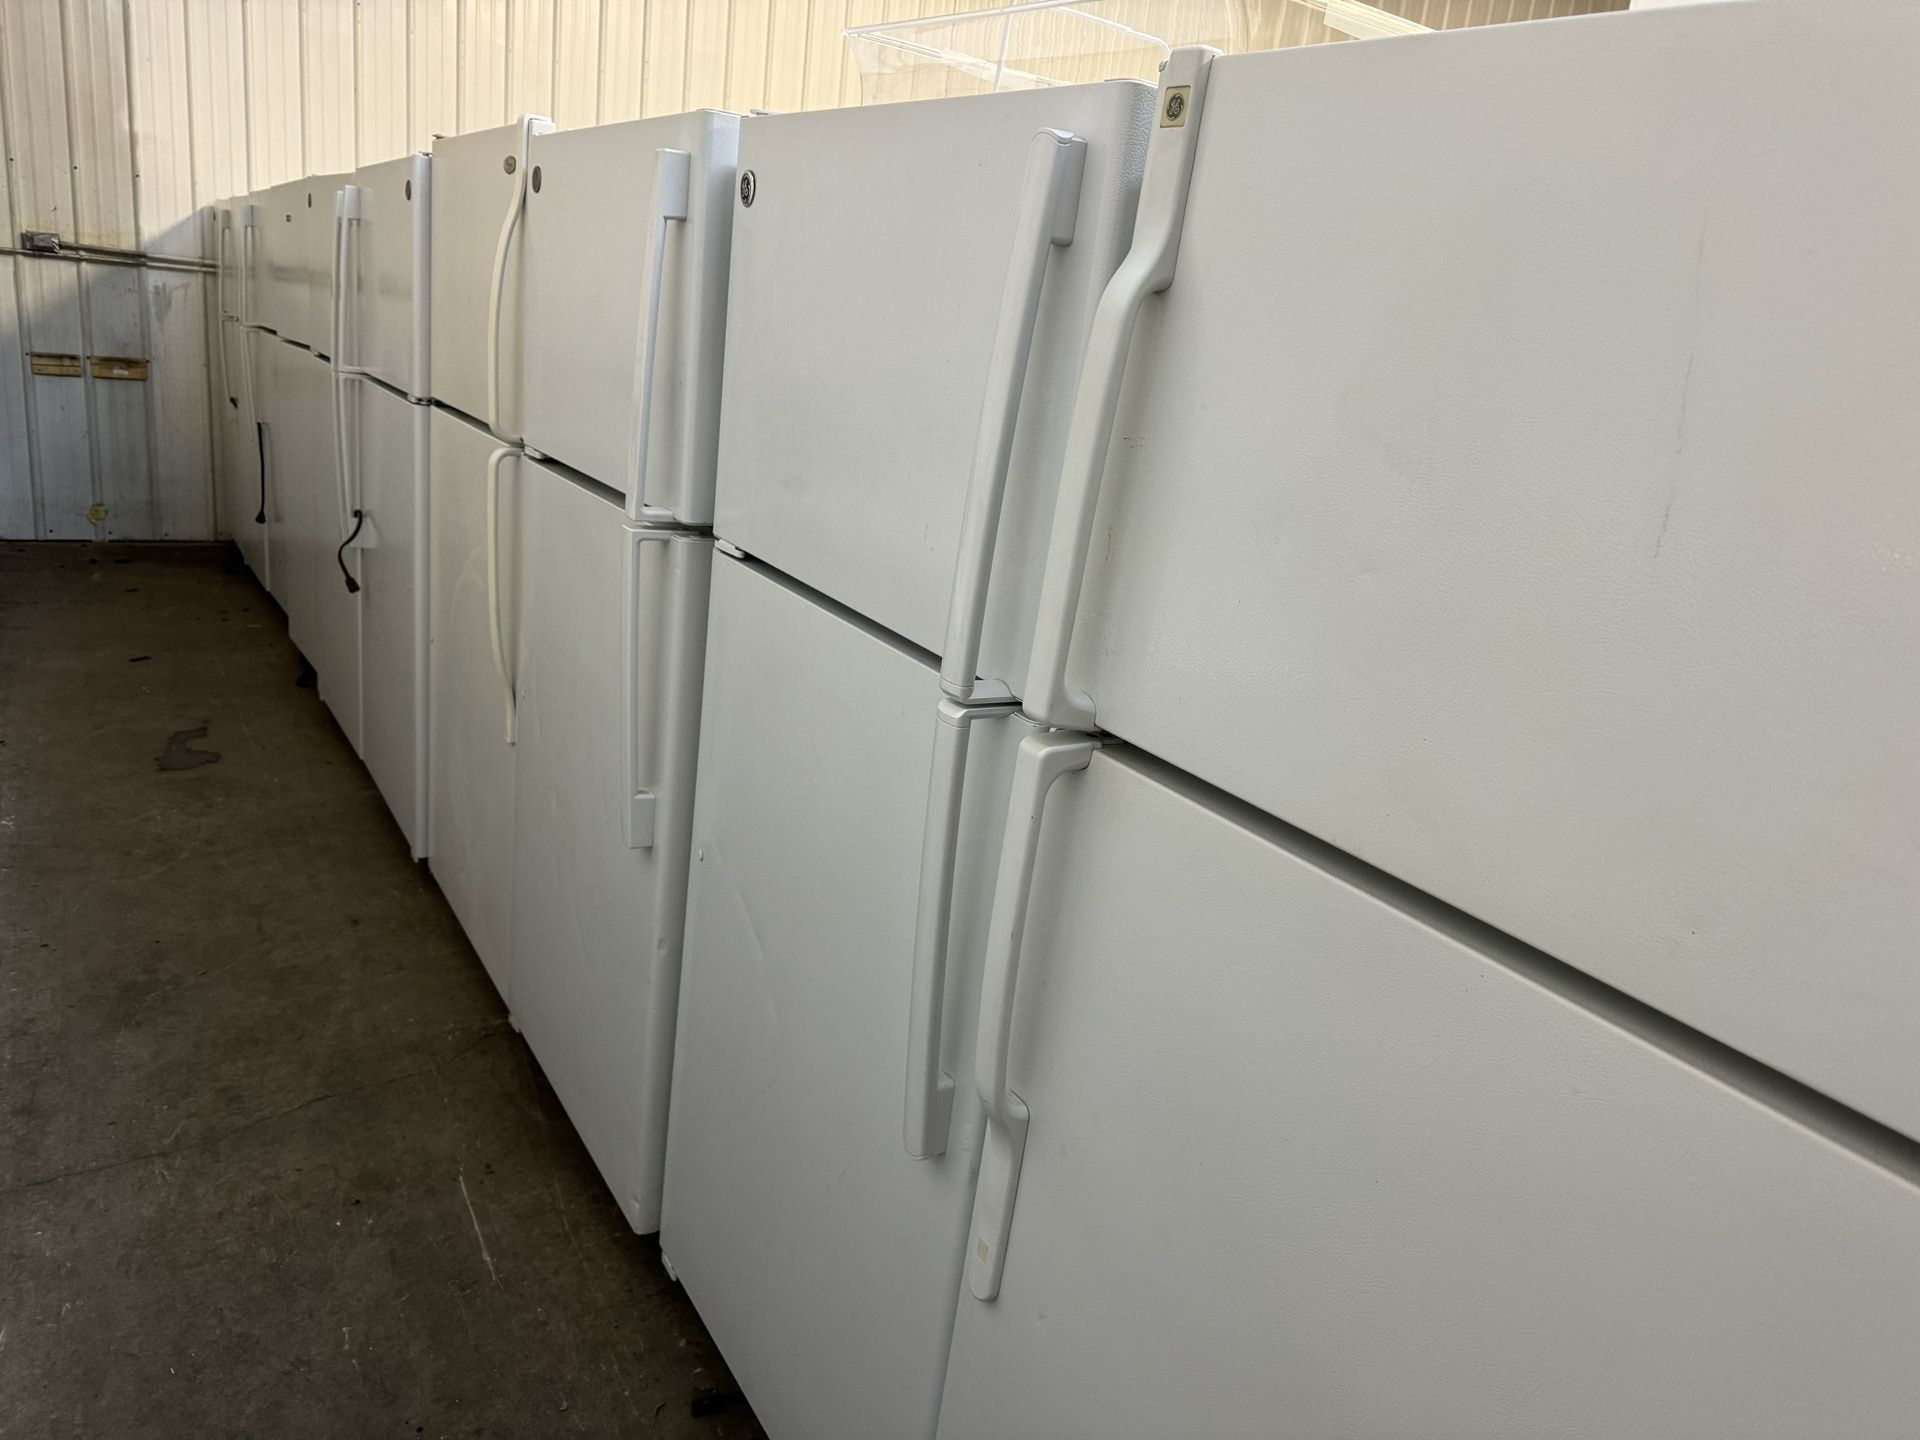 Several Clean White Refrigerators